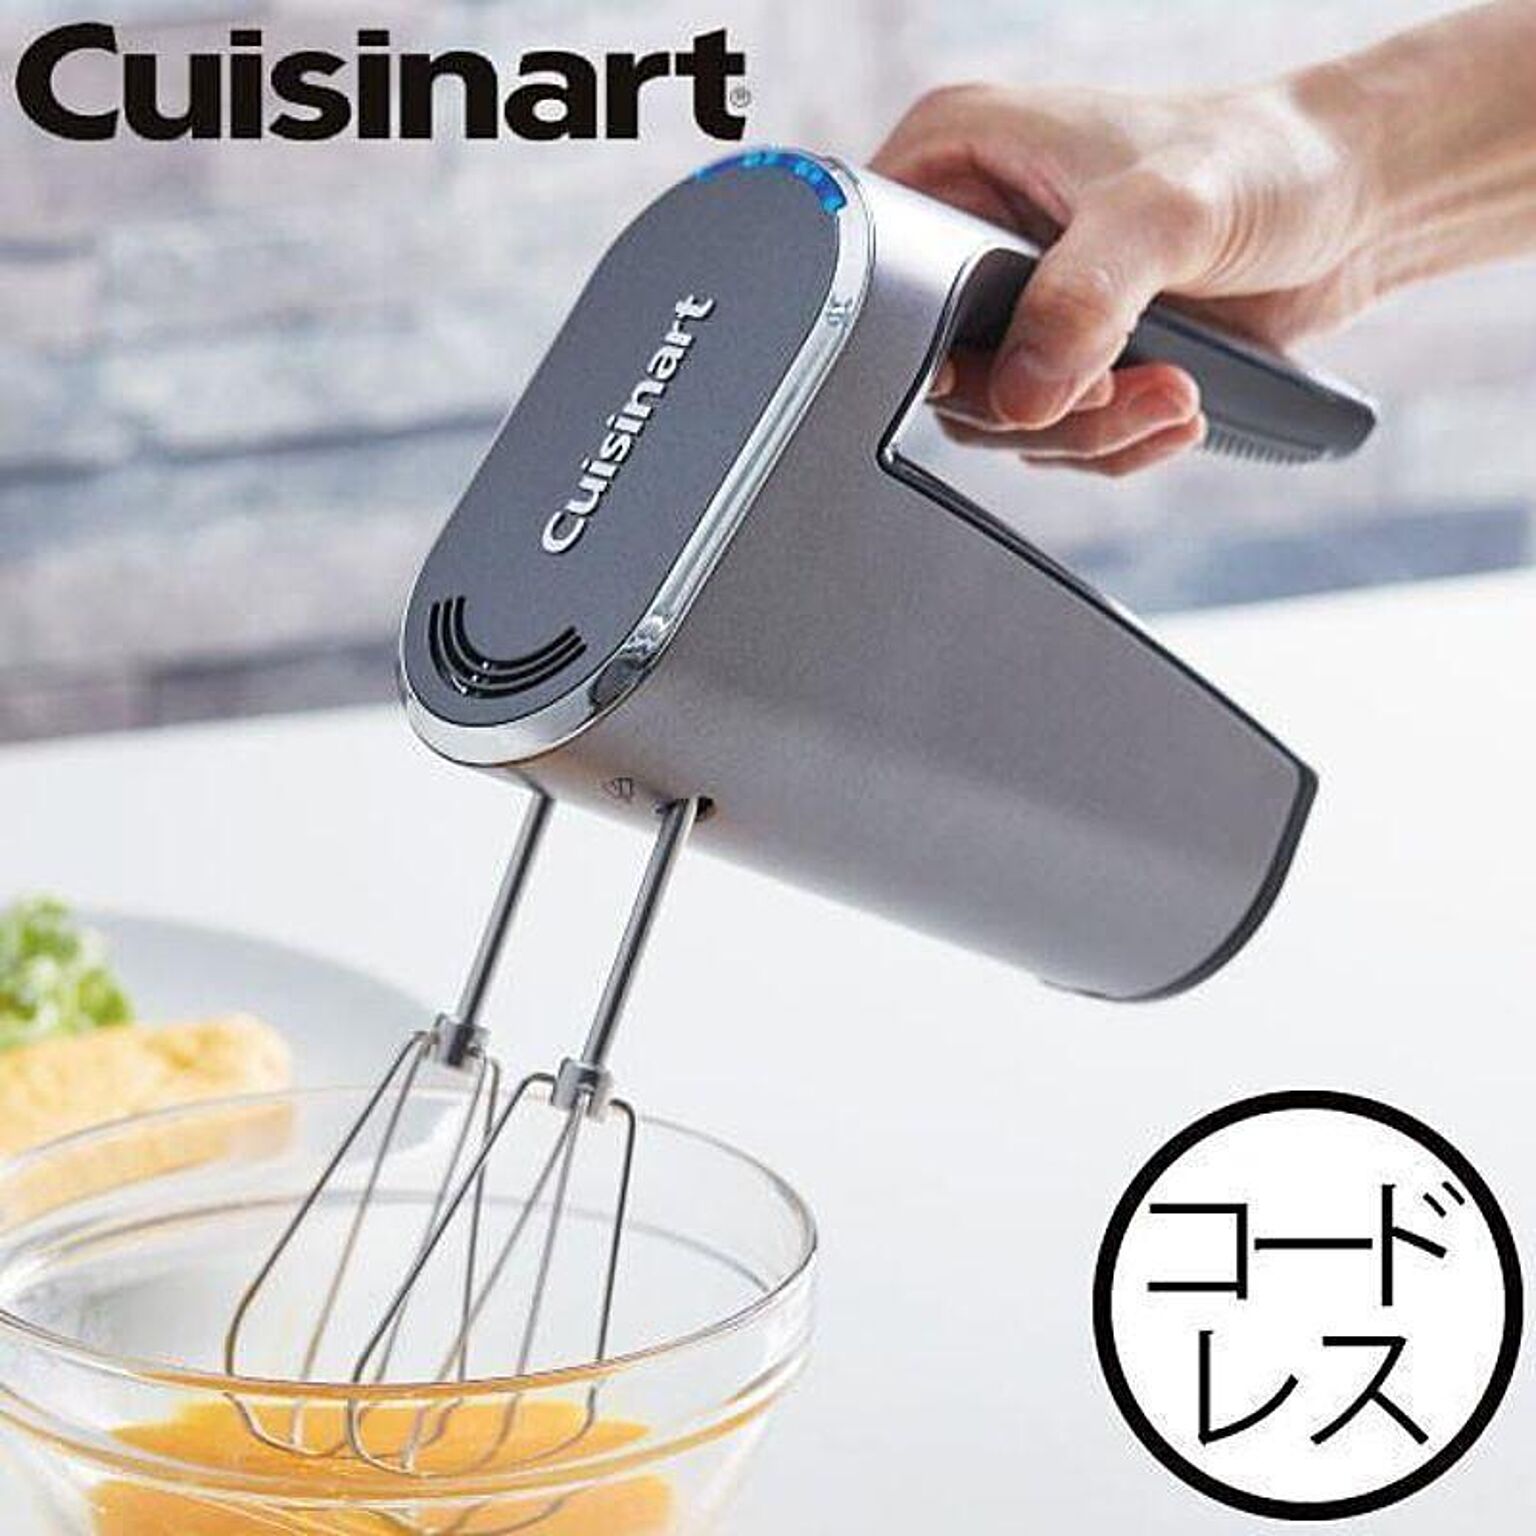 Cuisinart クイジナート コードレス充電式ハンドミキサー